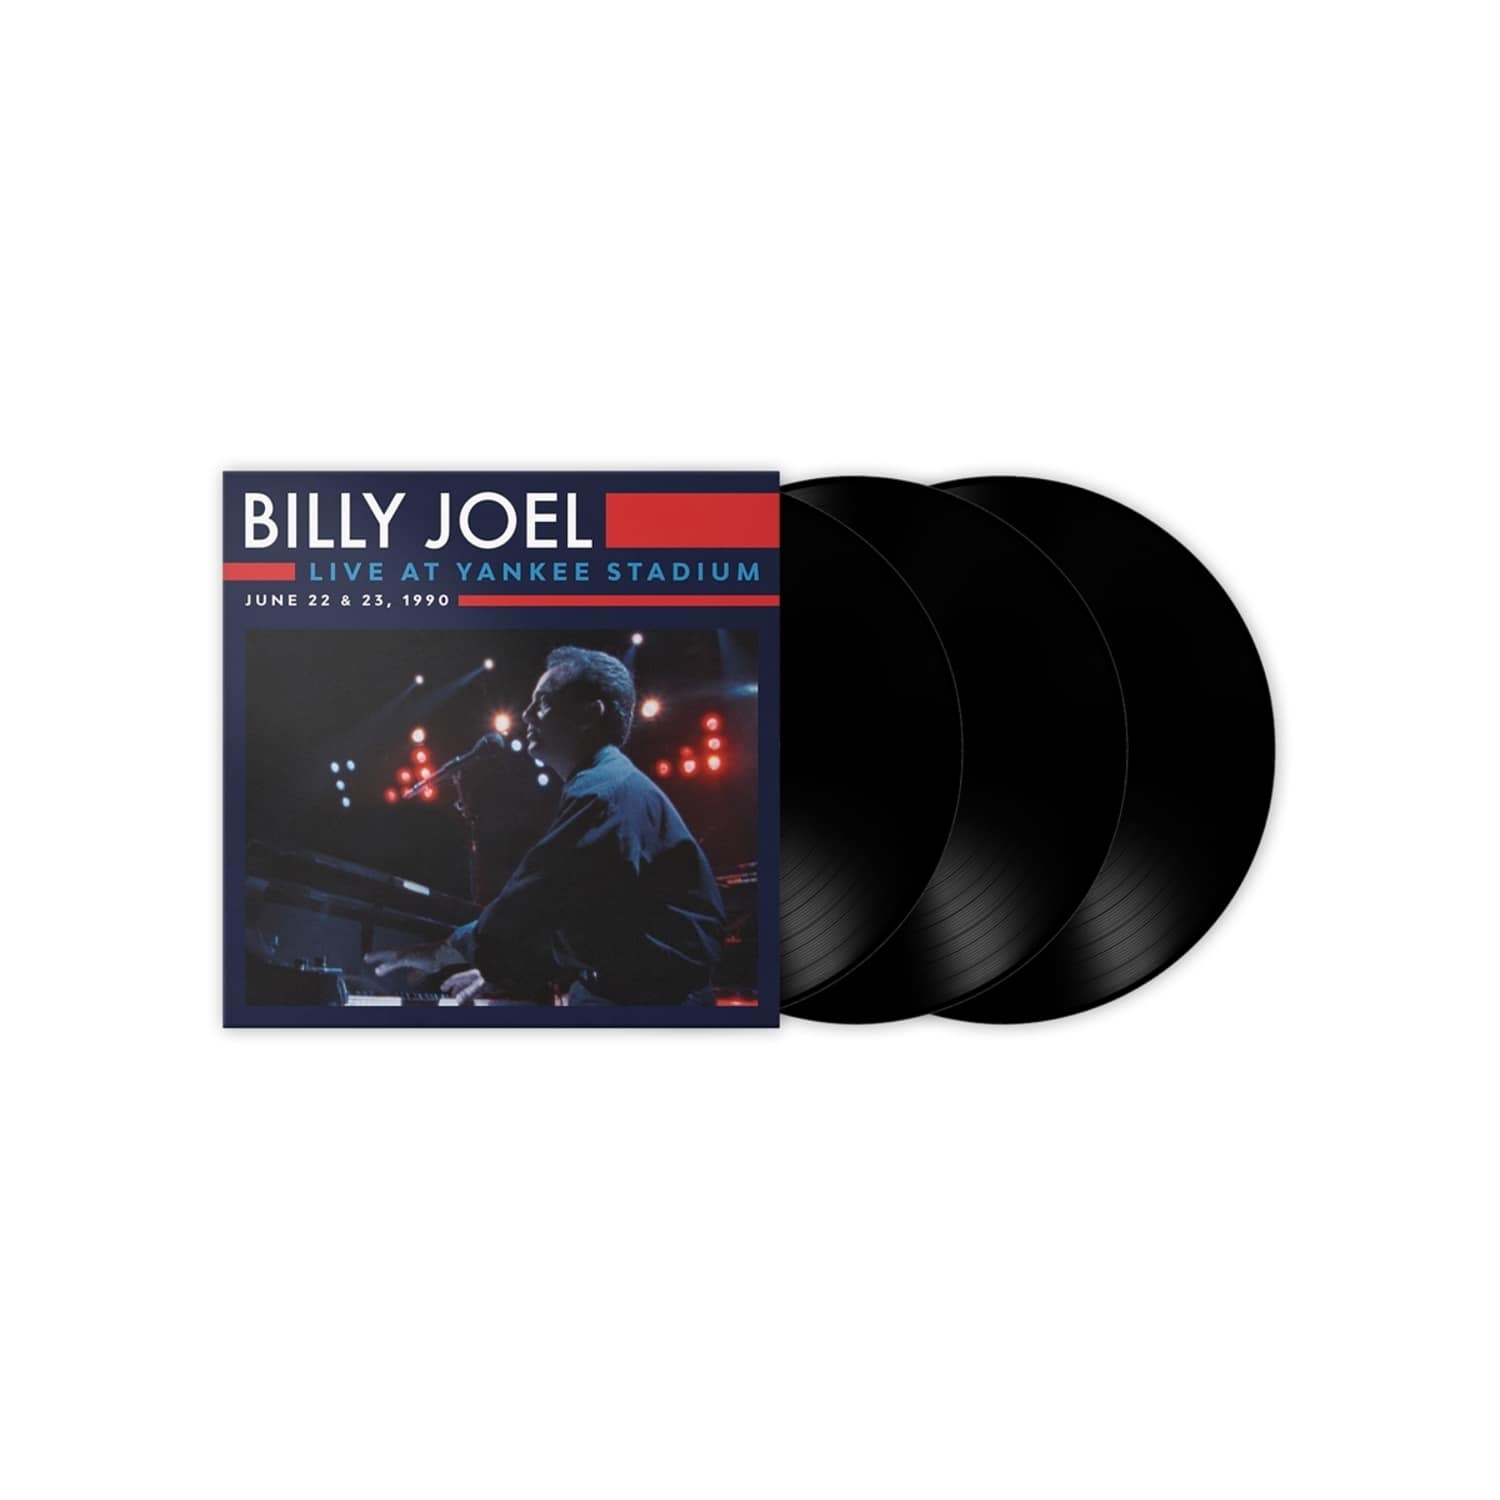 Billy Joel - LIVE AT YANKEE STADIUM 